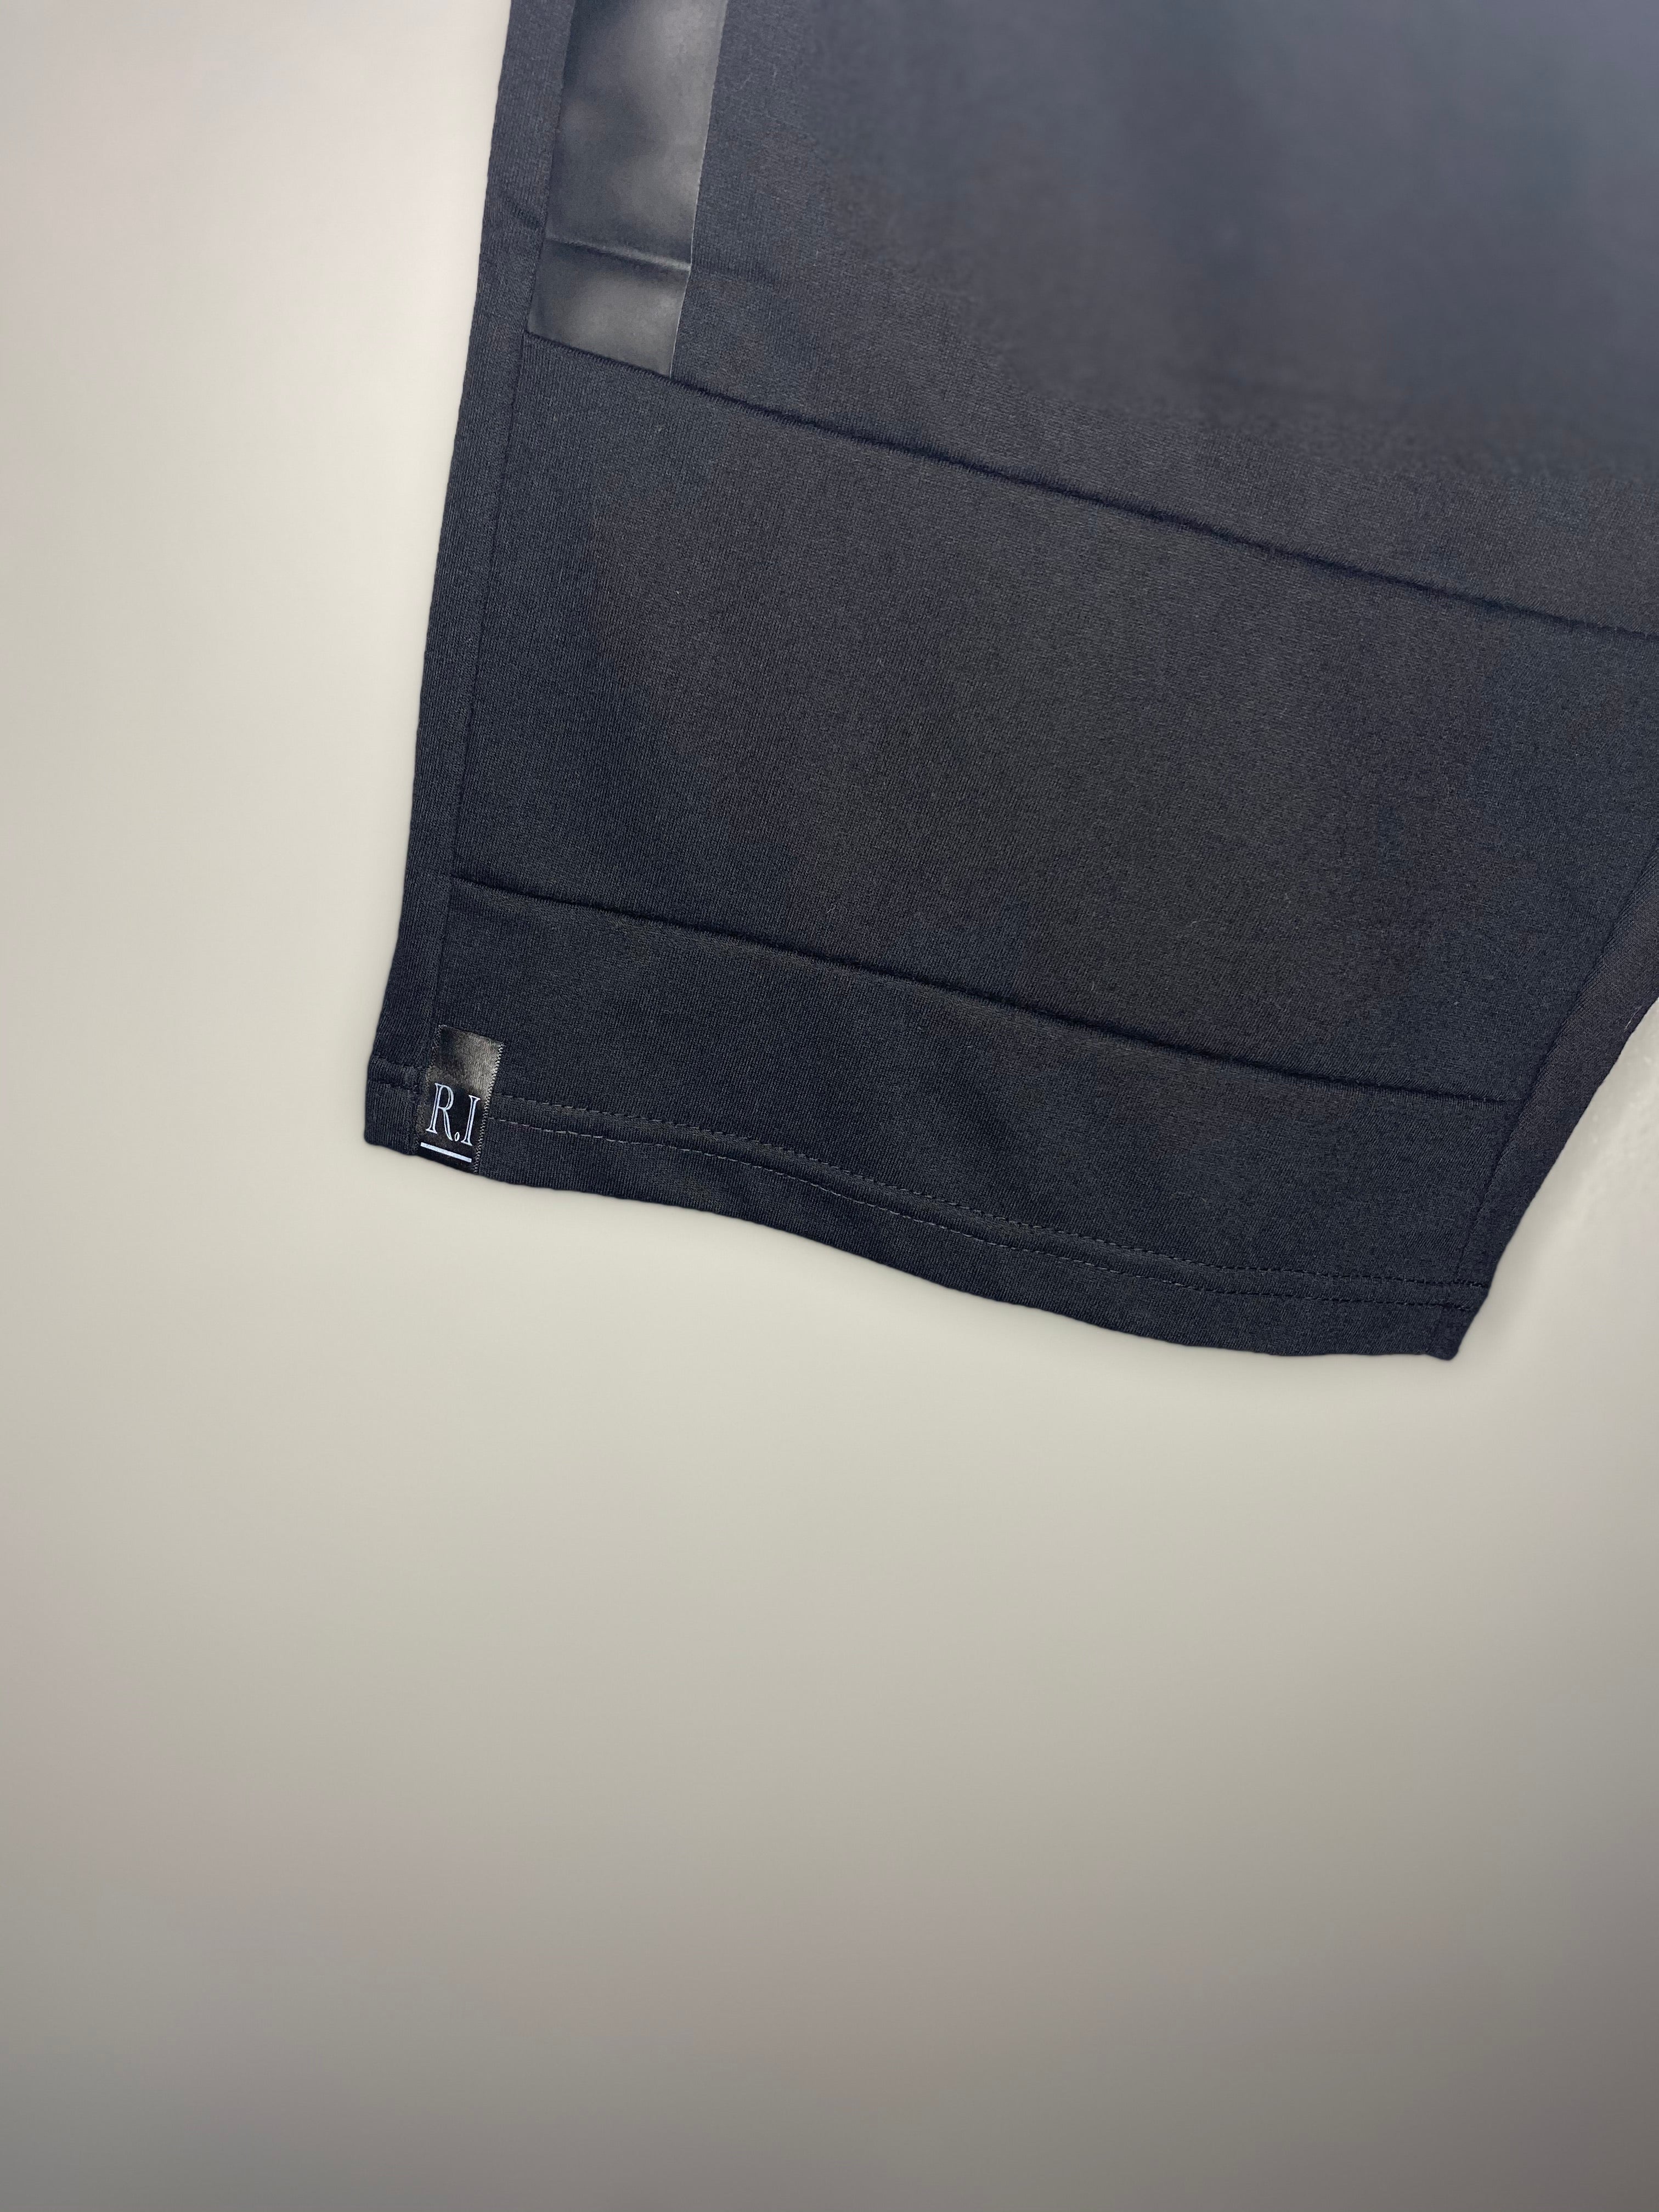 Euro Flex Tech Shorts - Black/Cran